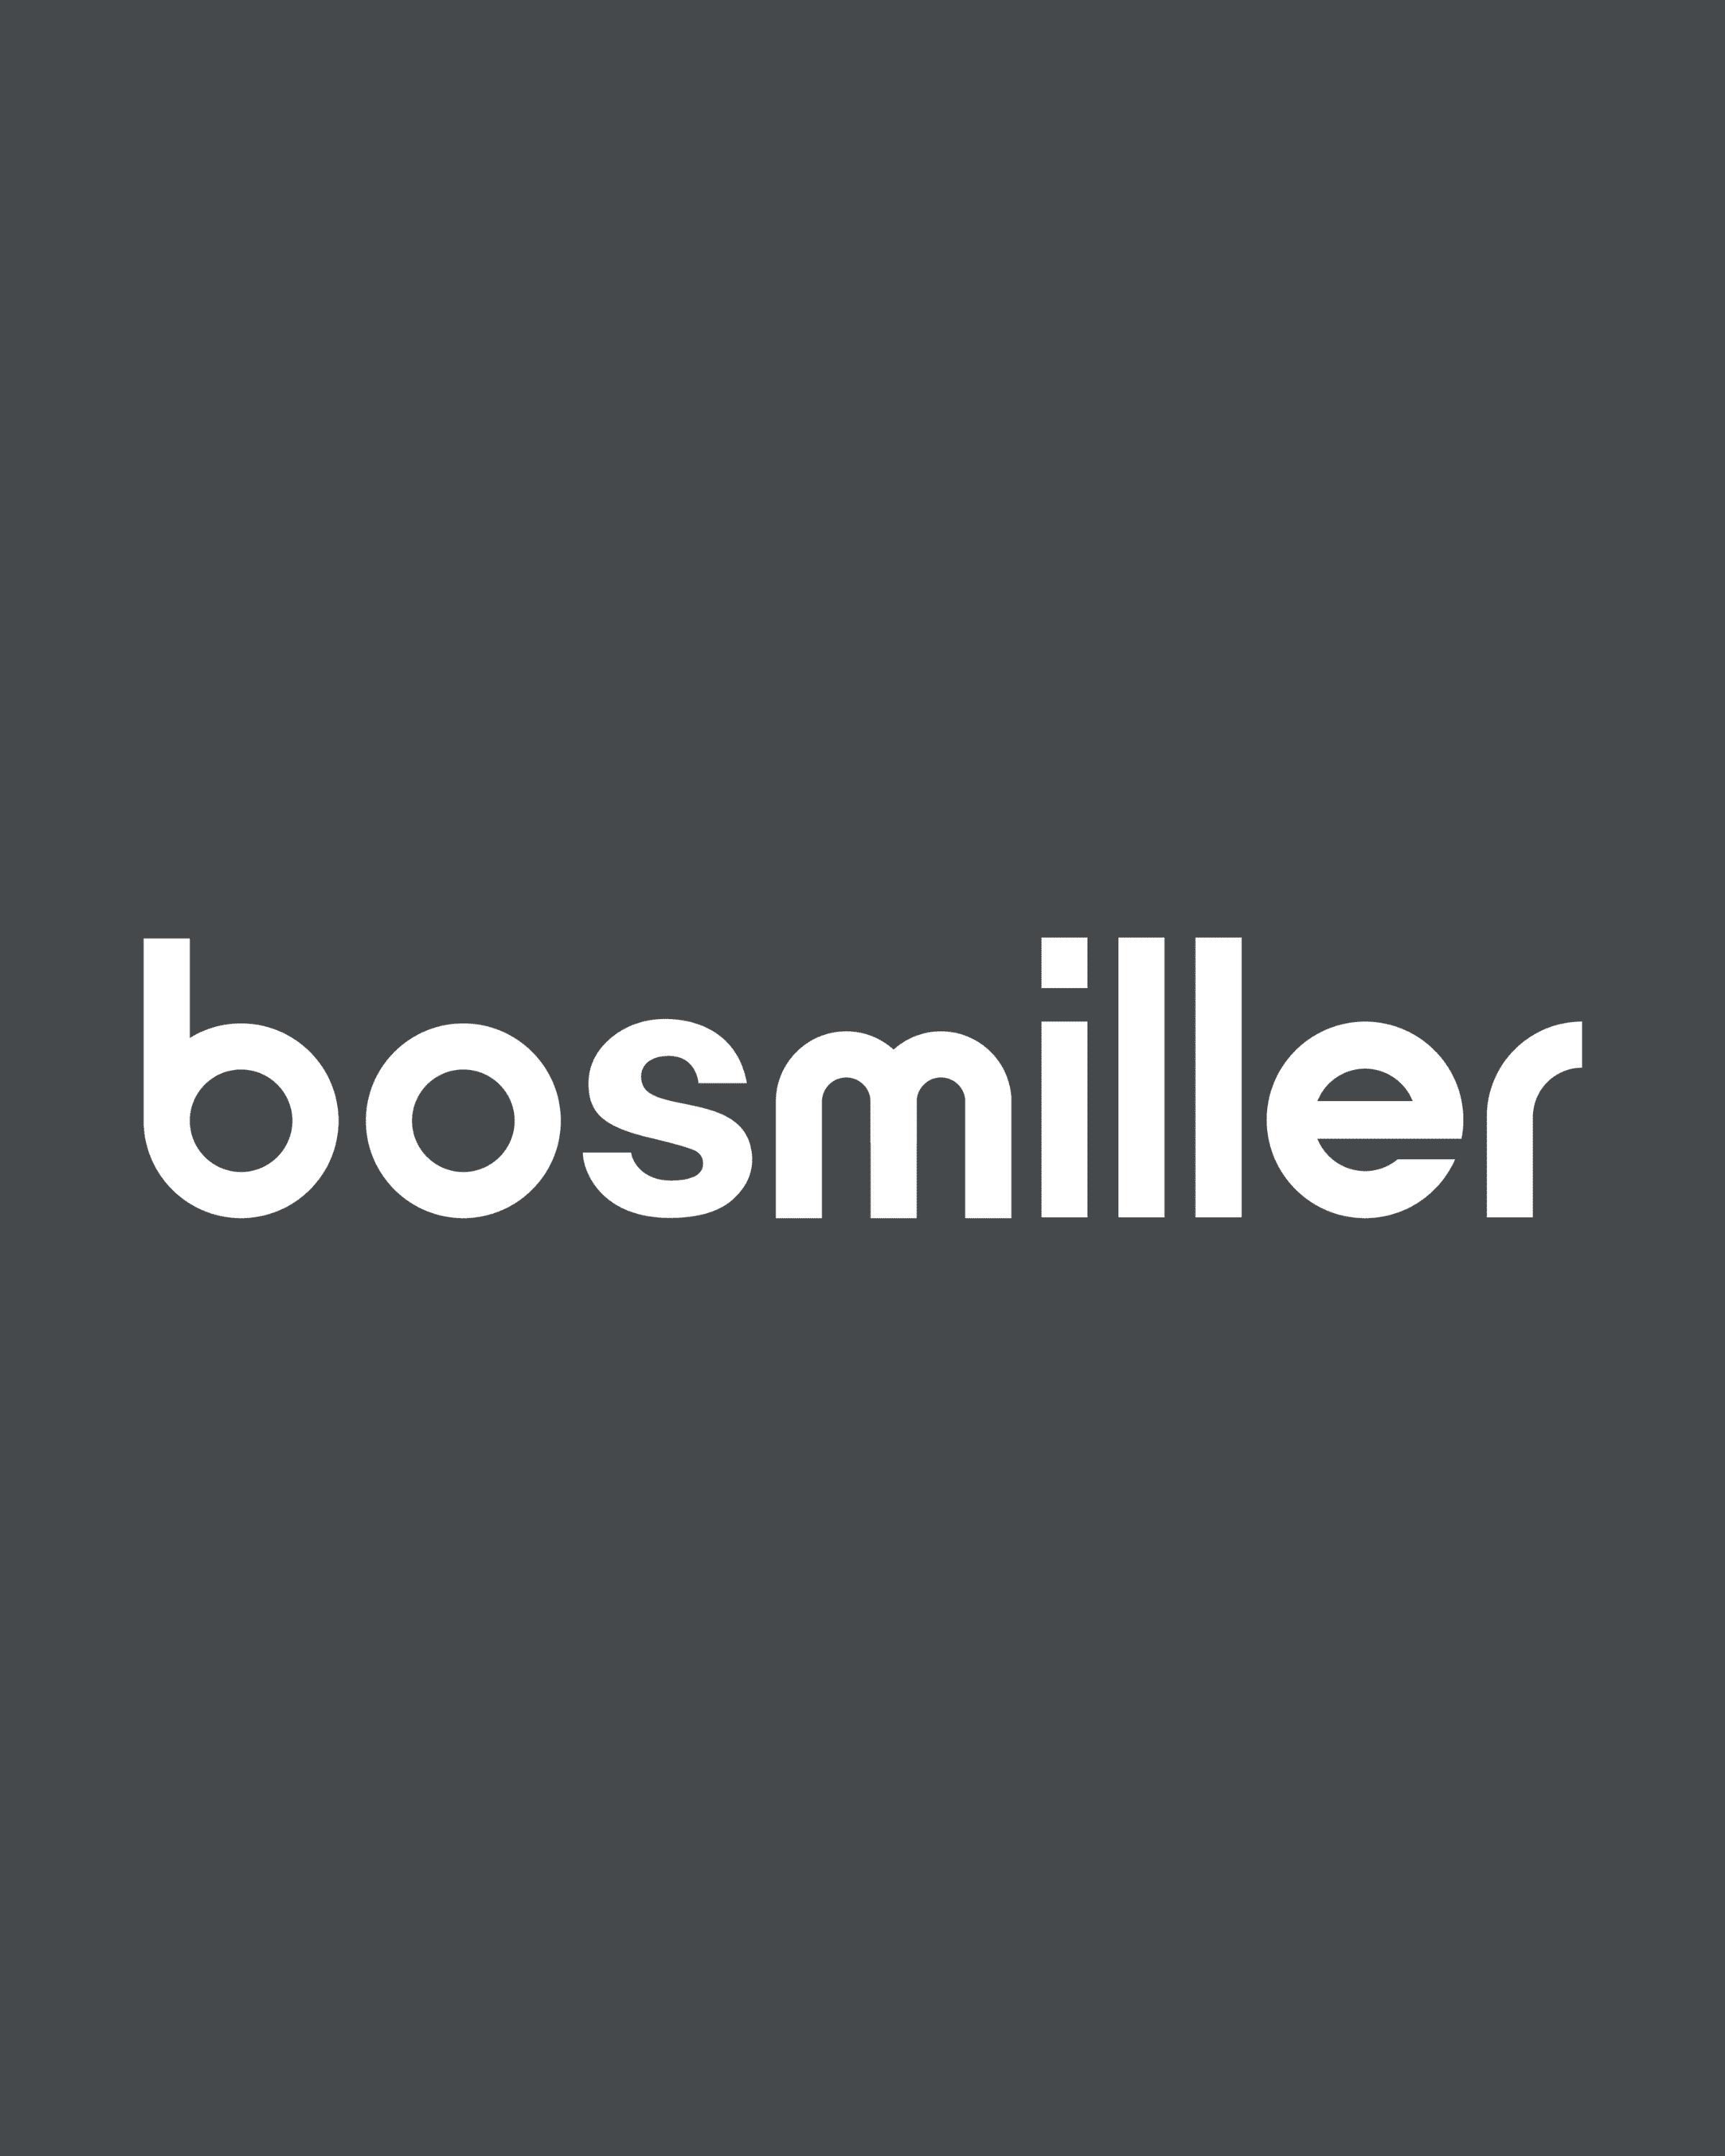 2019 Events PC Banner - Bosmiller